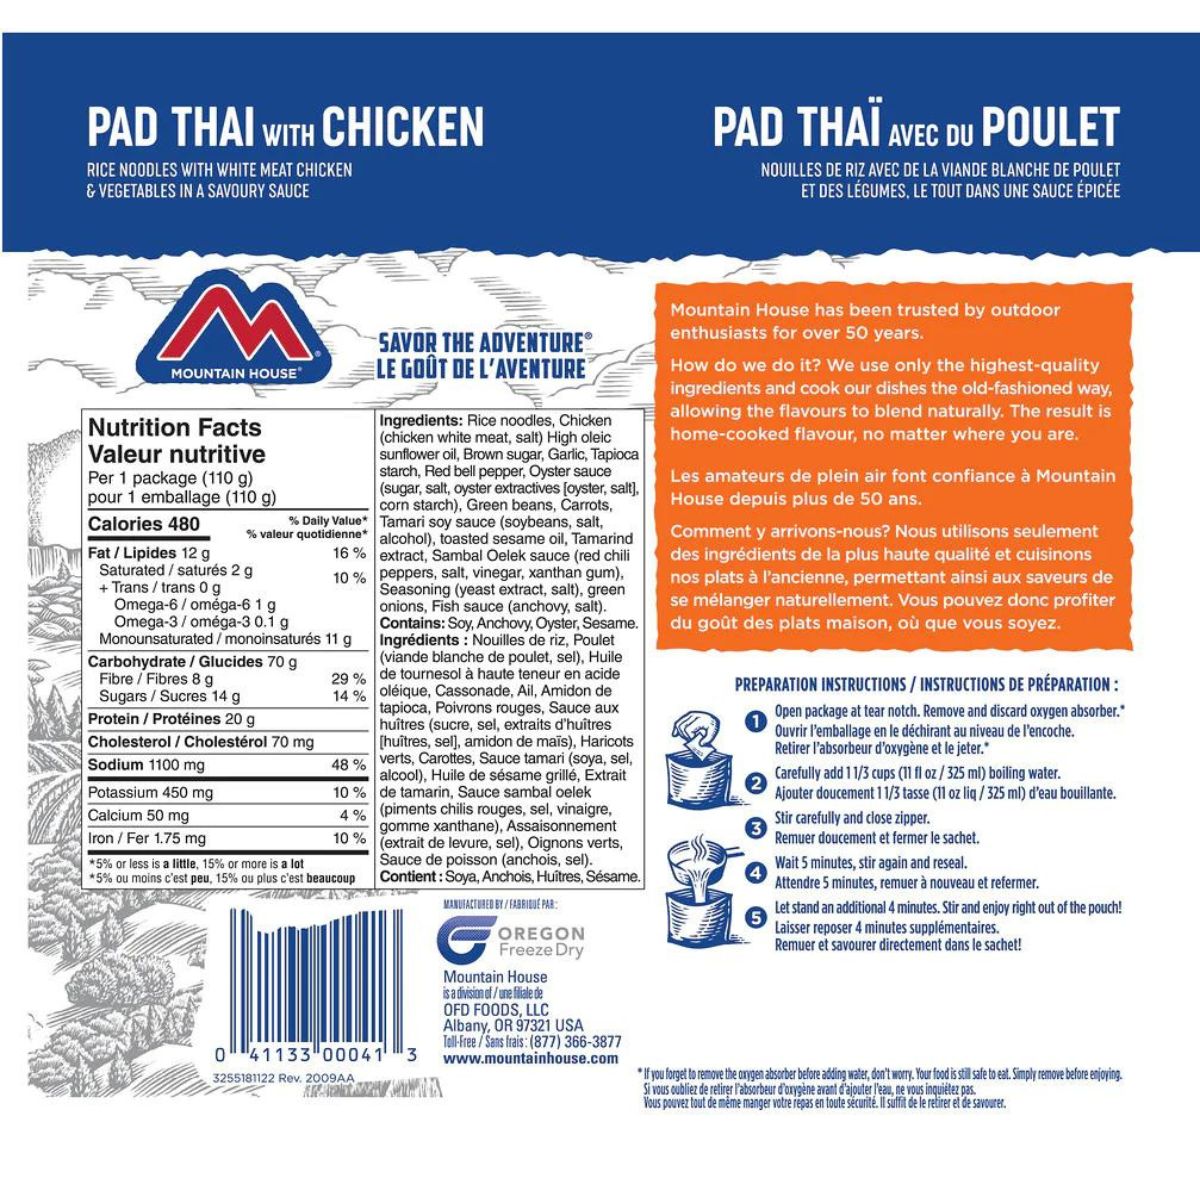 Mountain House Pad Thai with Chicken- Gluten Free